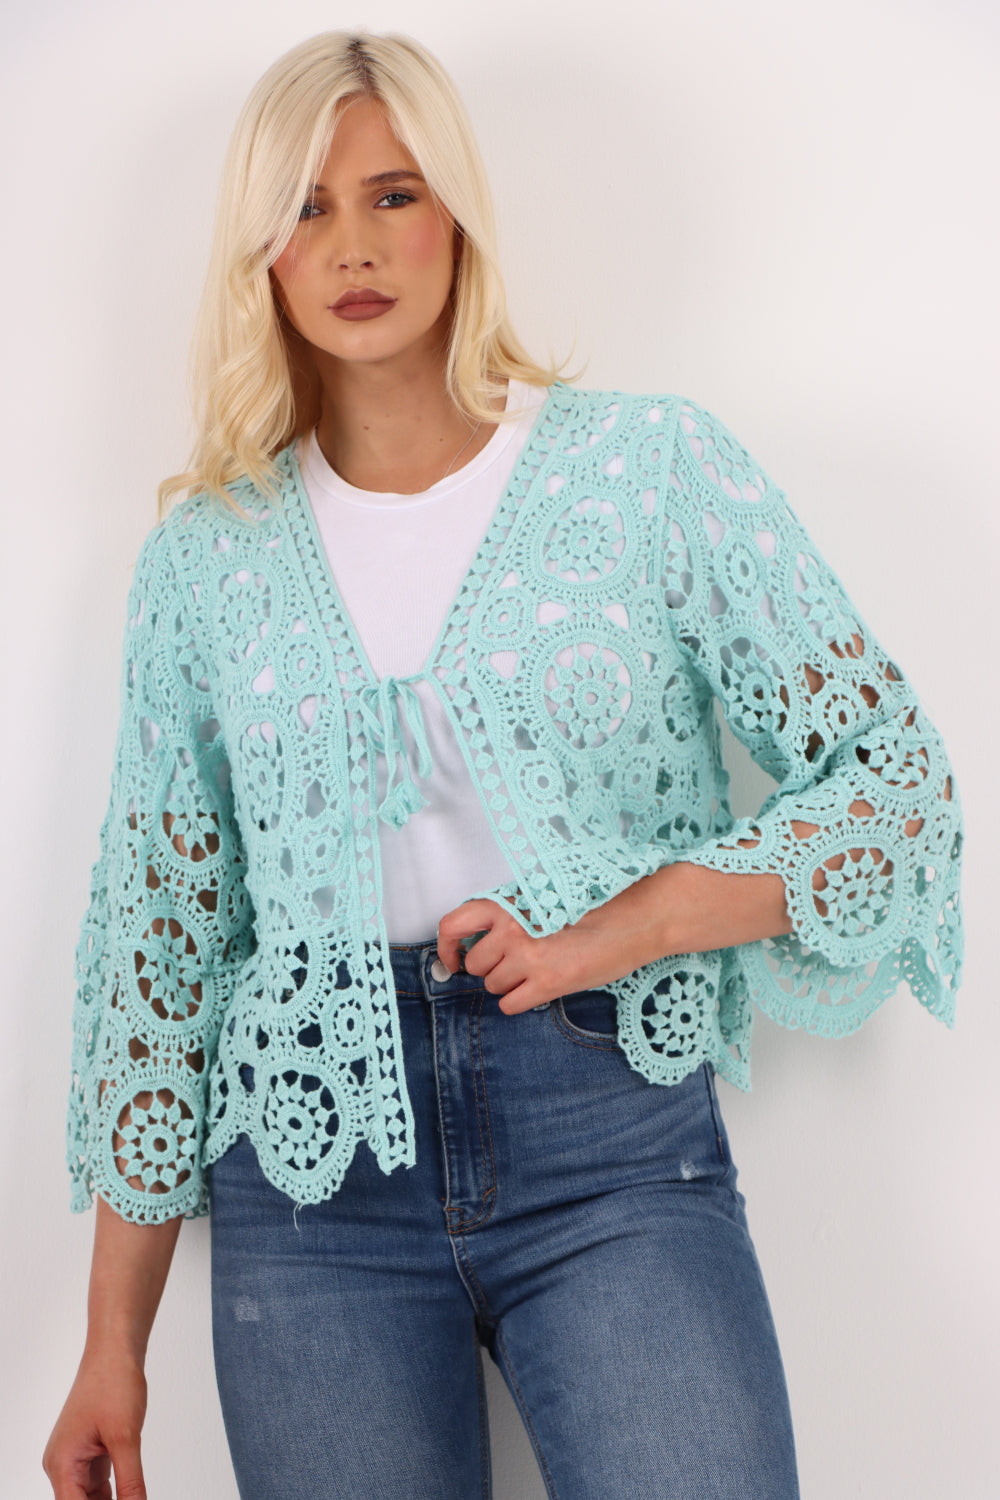 Tie Front Crochet Lace Shrug Pattern Cardigan